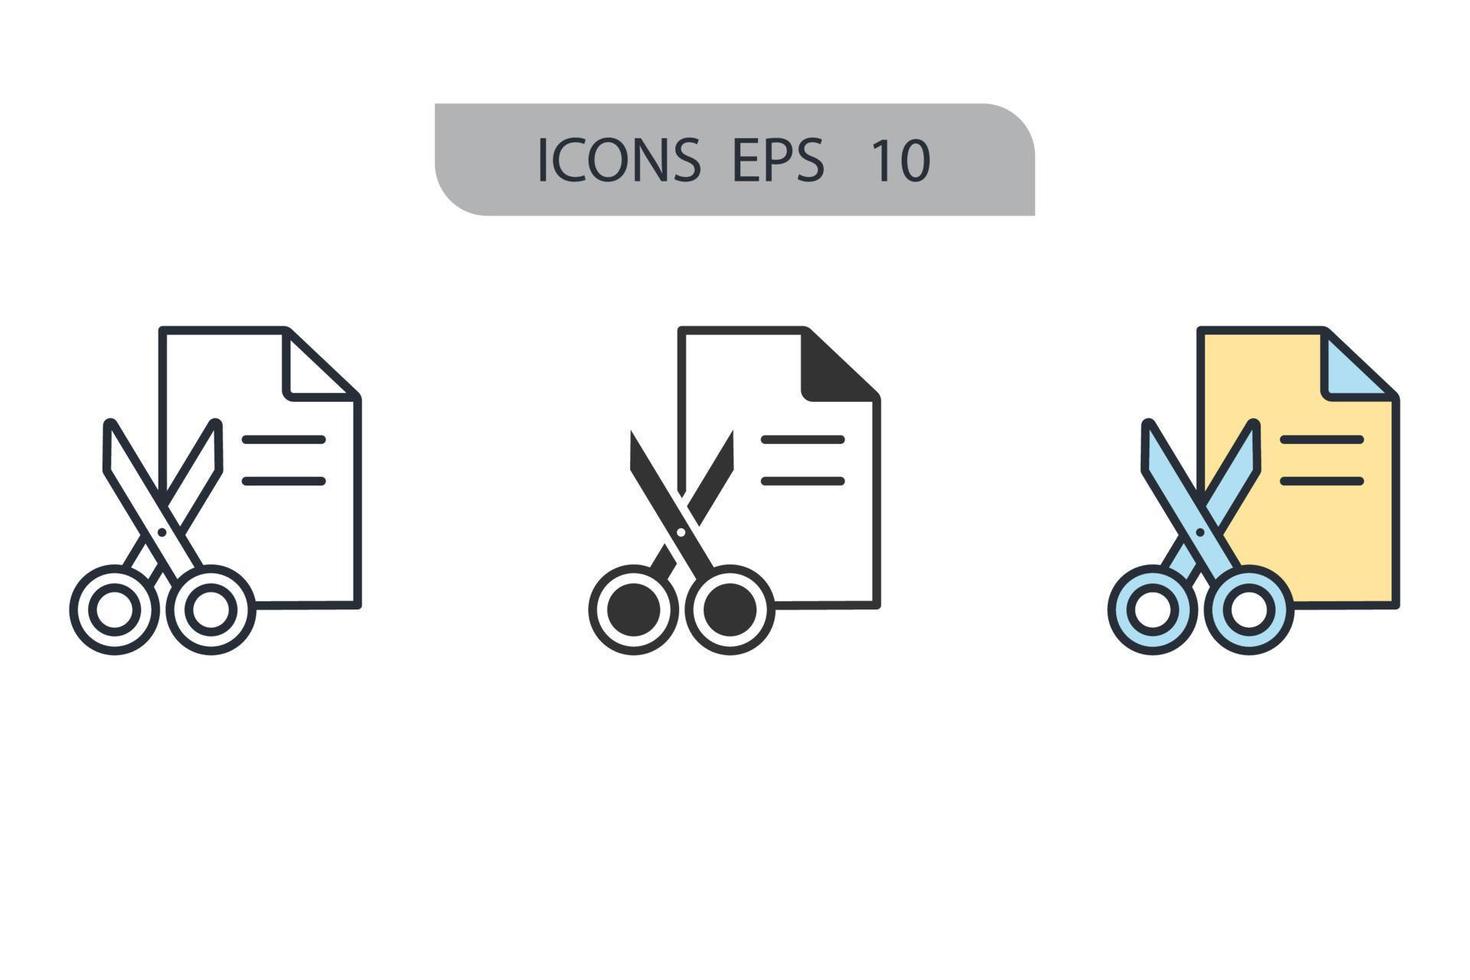 Scissors icons  symbol vector elements for infographic web